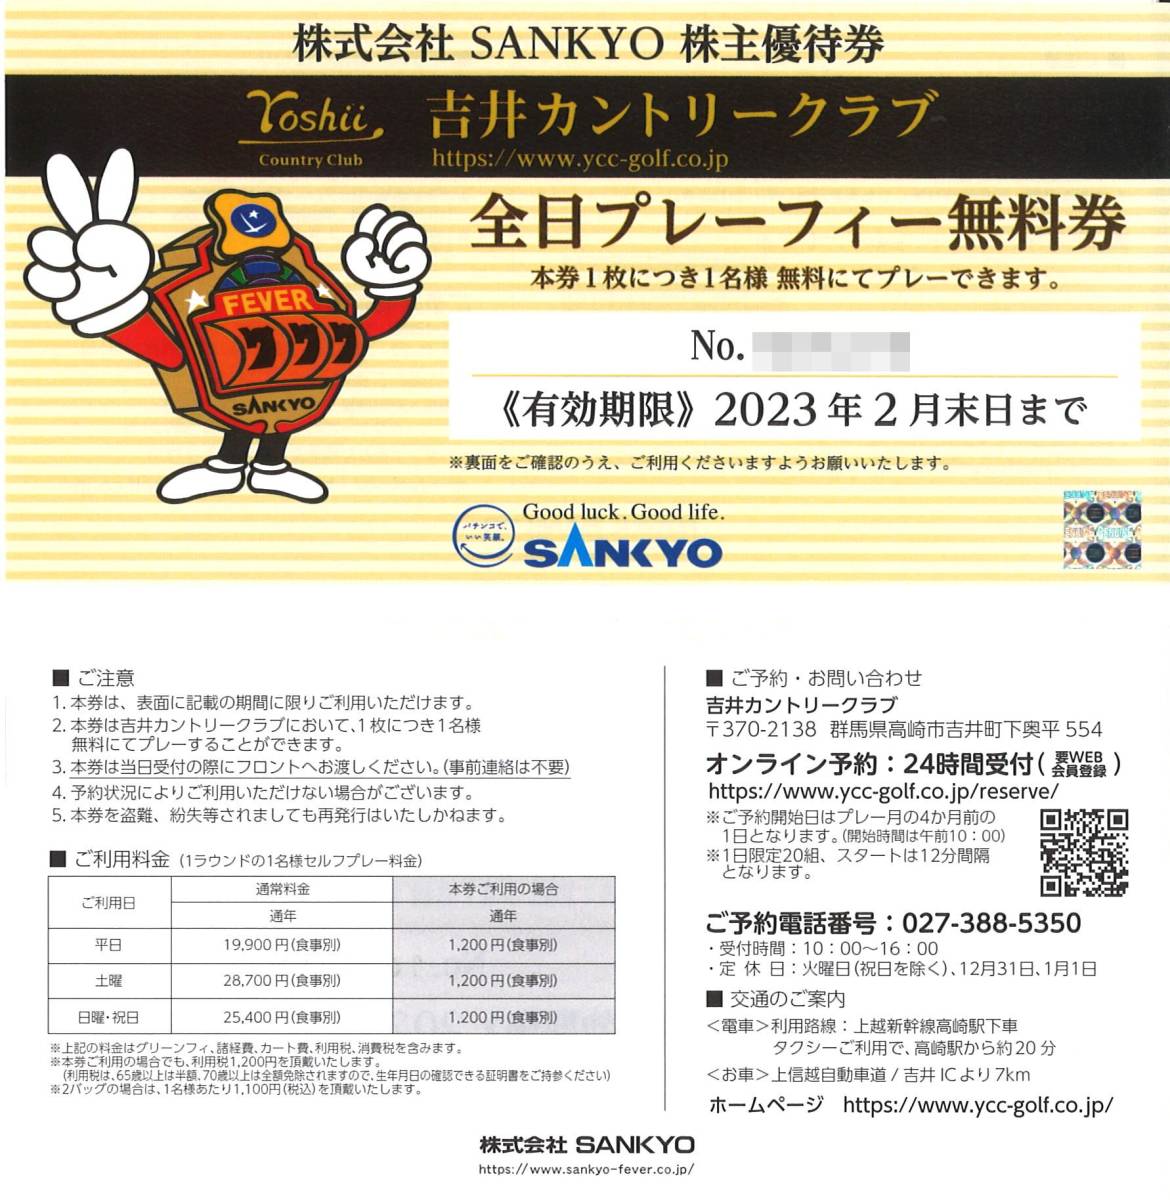 SANKYO 株主優待 吉井カントリークラブ 全日プレーフィー無料券(1枚 